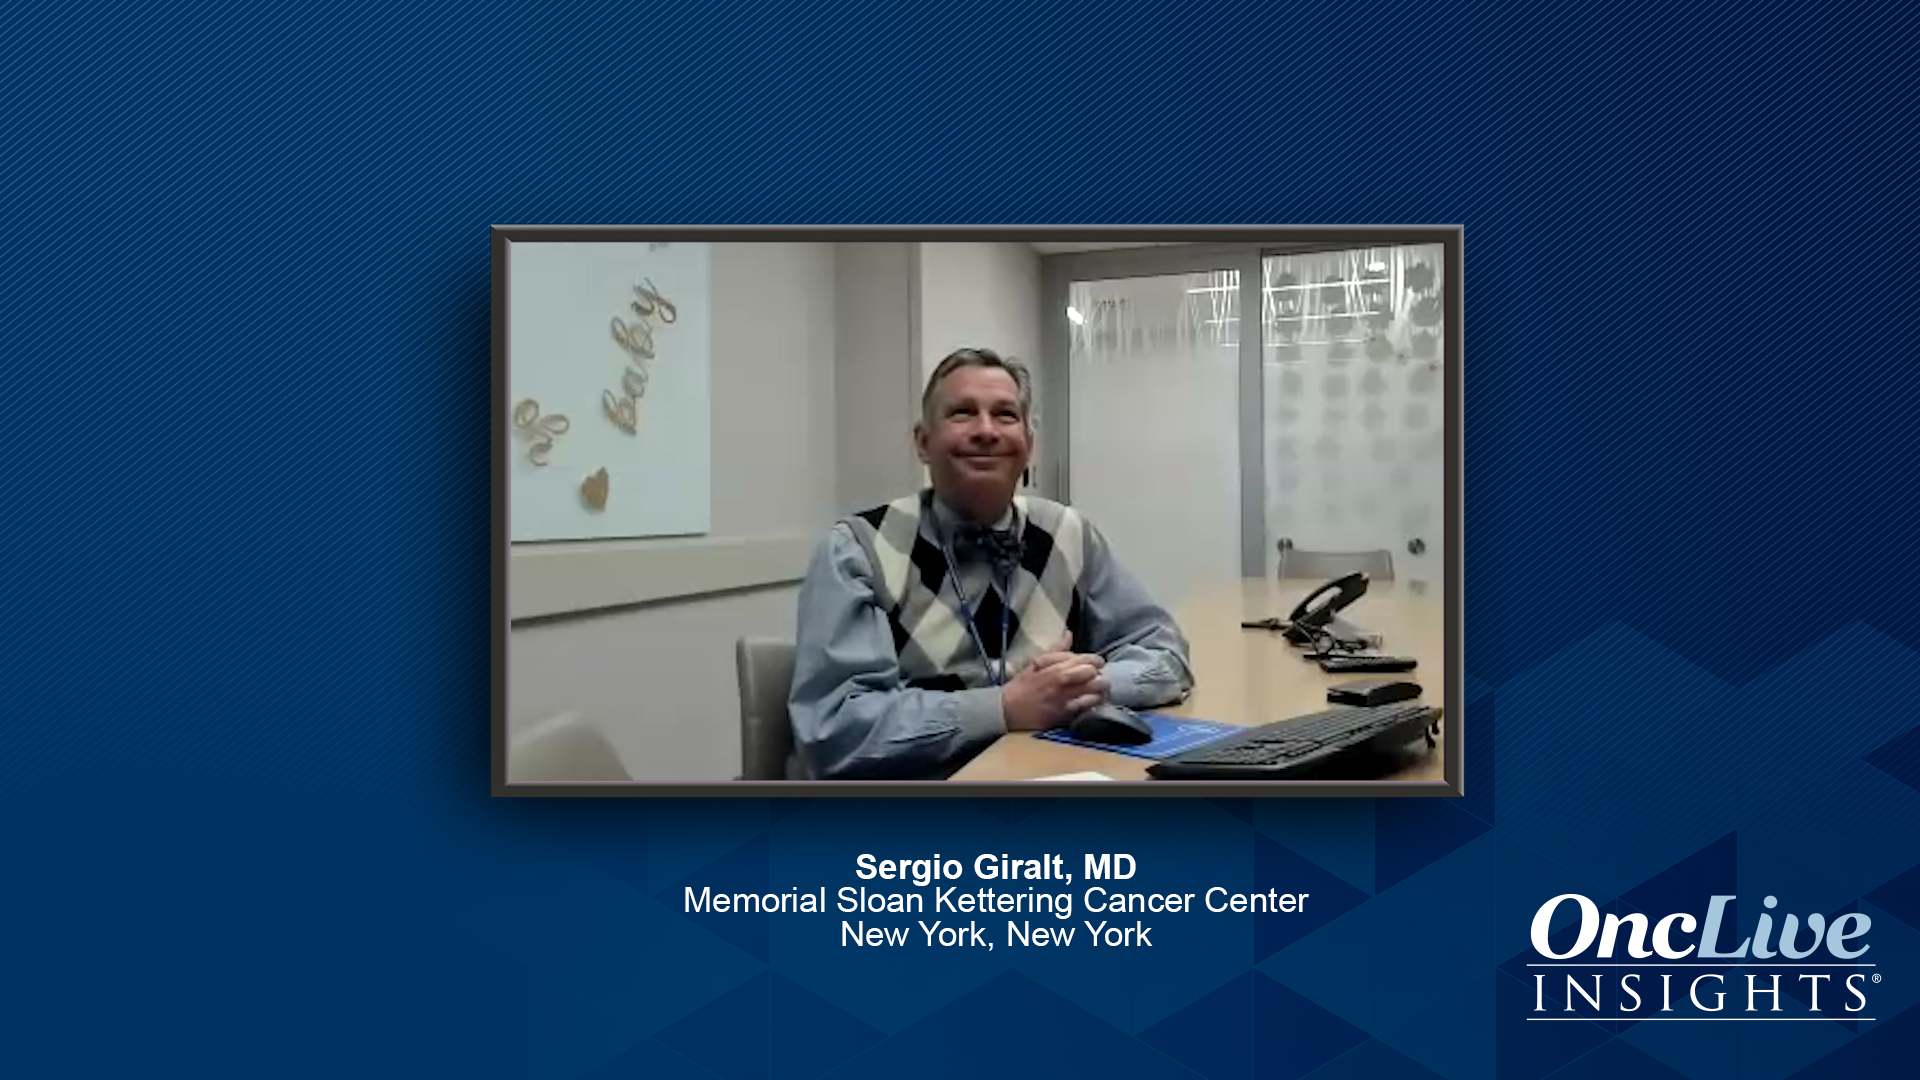 Sergio Giralt, MD, an expert on veno-occlusive disease